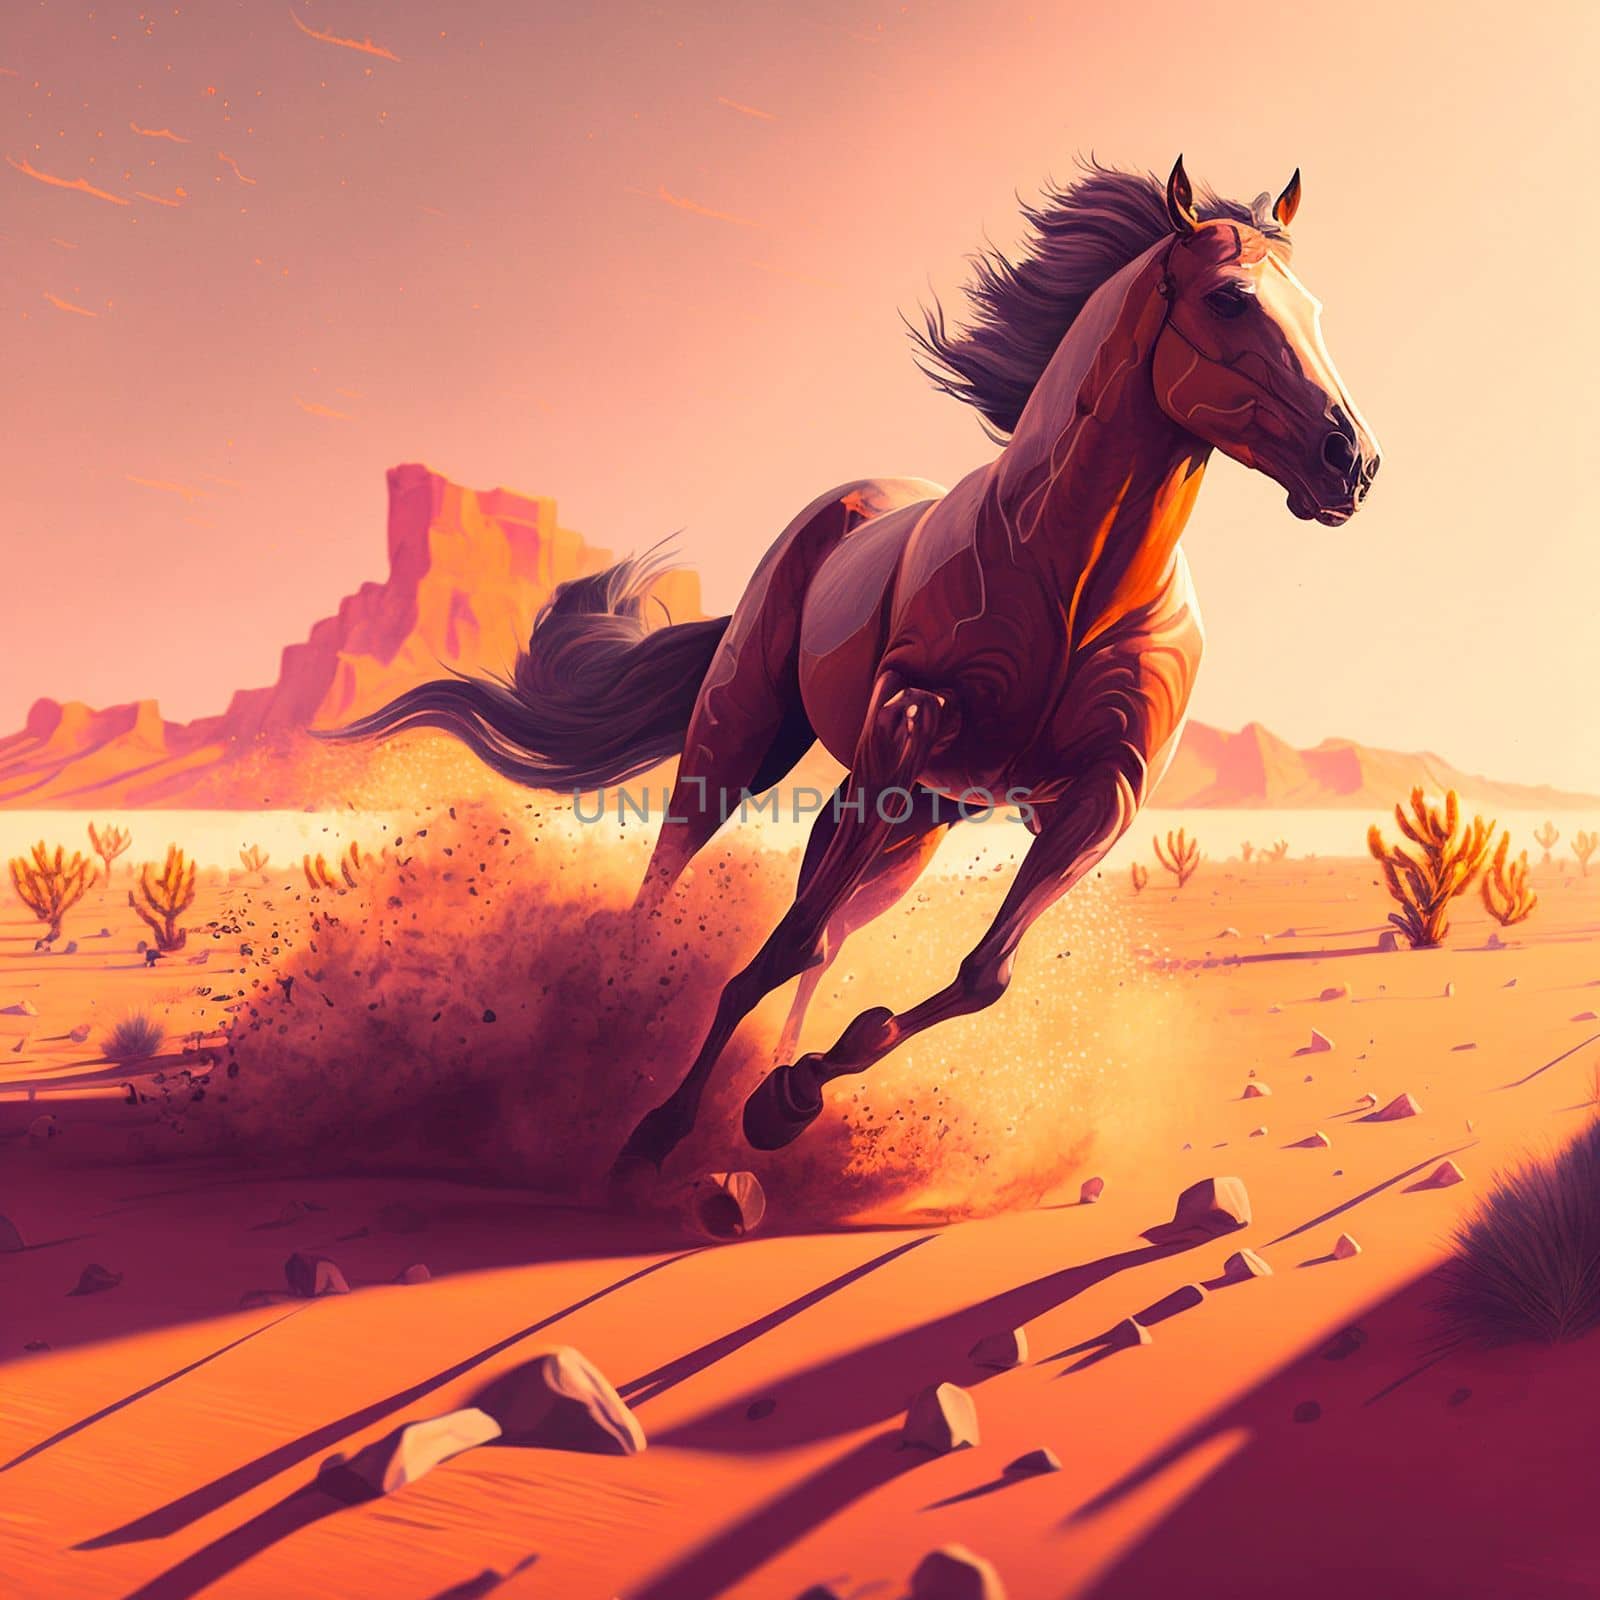 The horse runs through the desert, kicking up the sand by NeuroSky